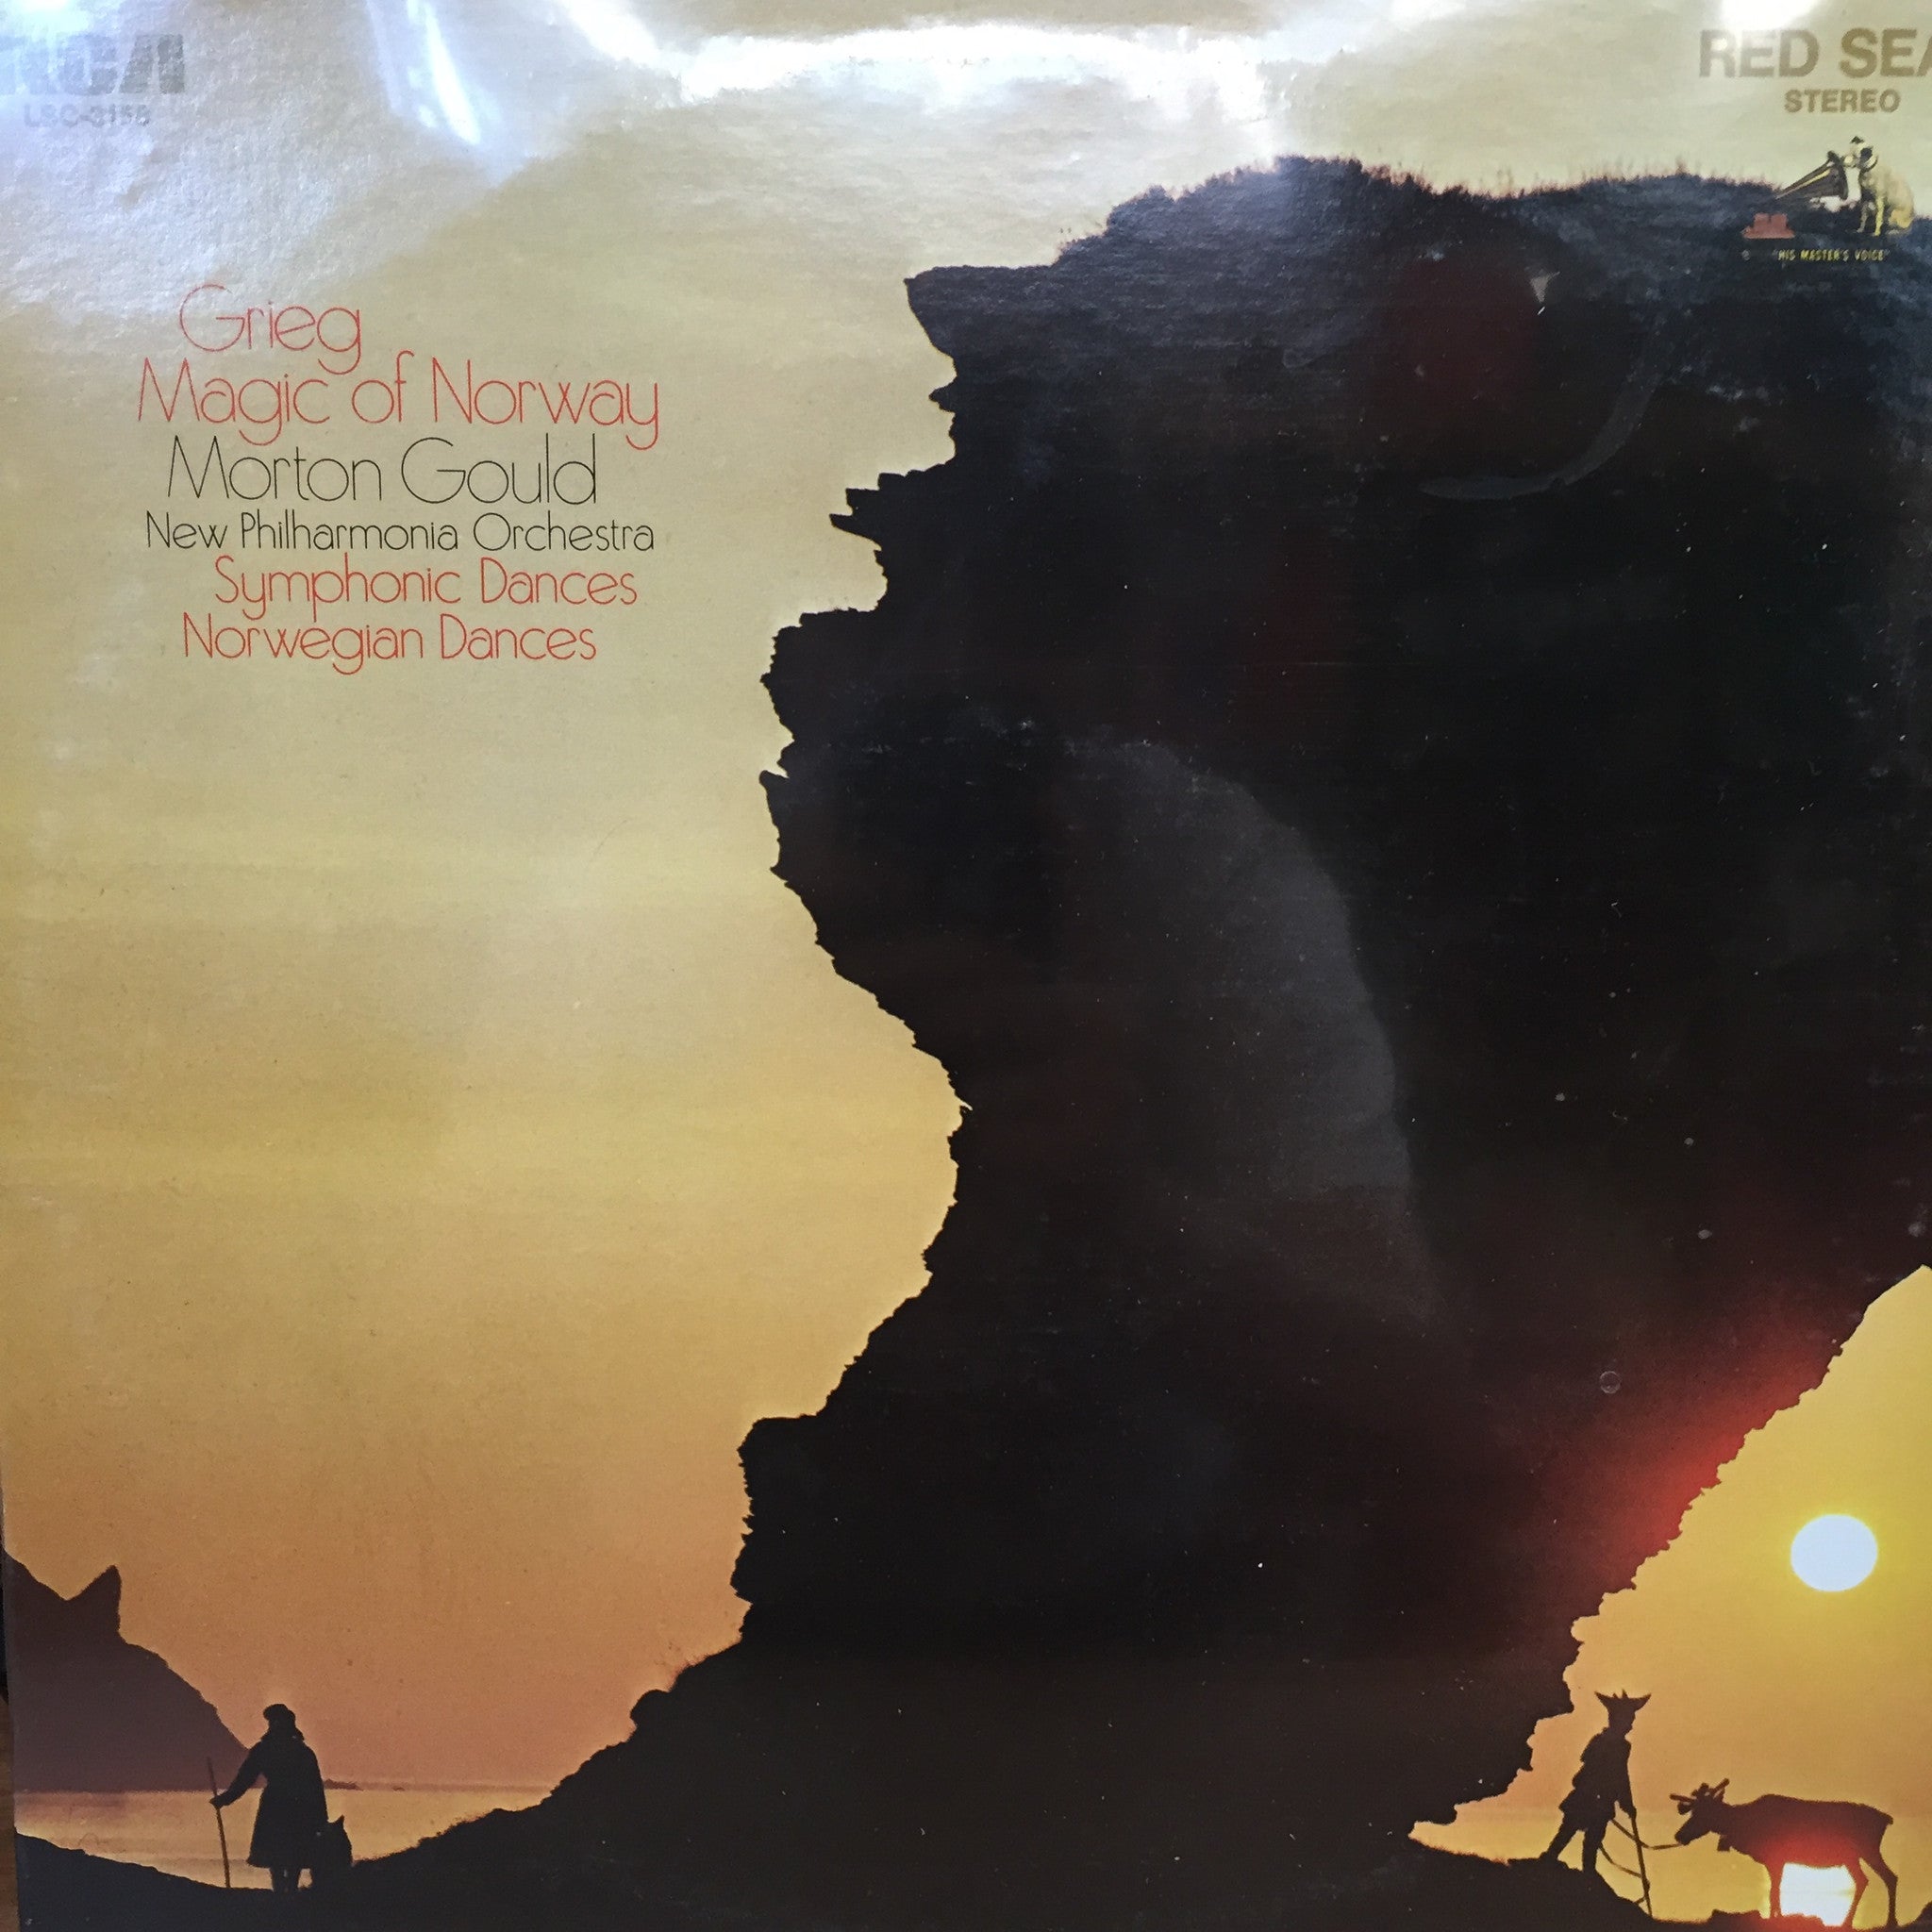 Morton Gould ‎– Grieg: Symphonic Dances; Norweigan Dances - New Vinyl Record 1970 (Original Press) USA - Classical